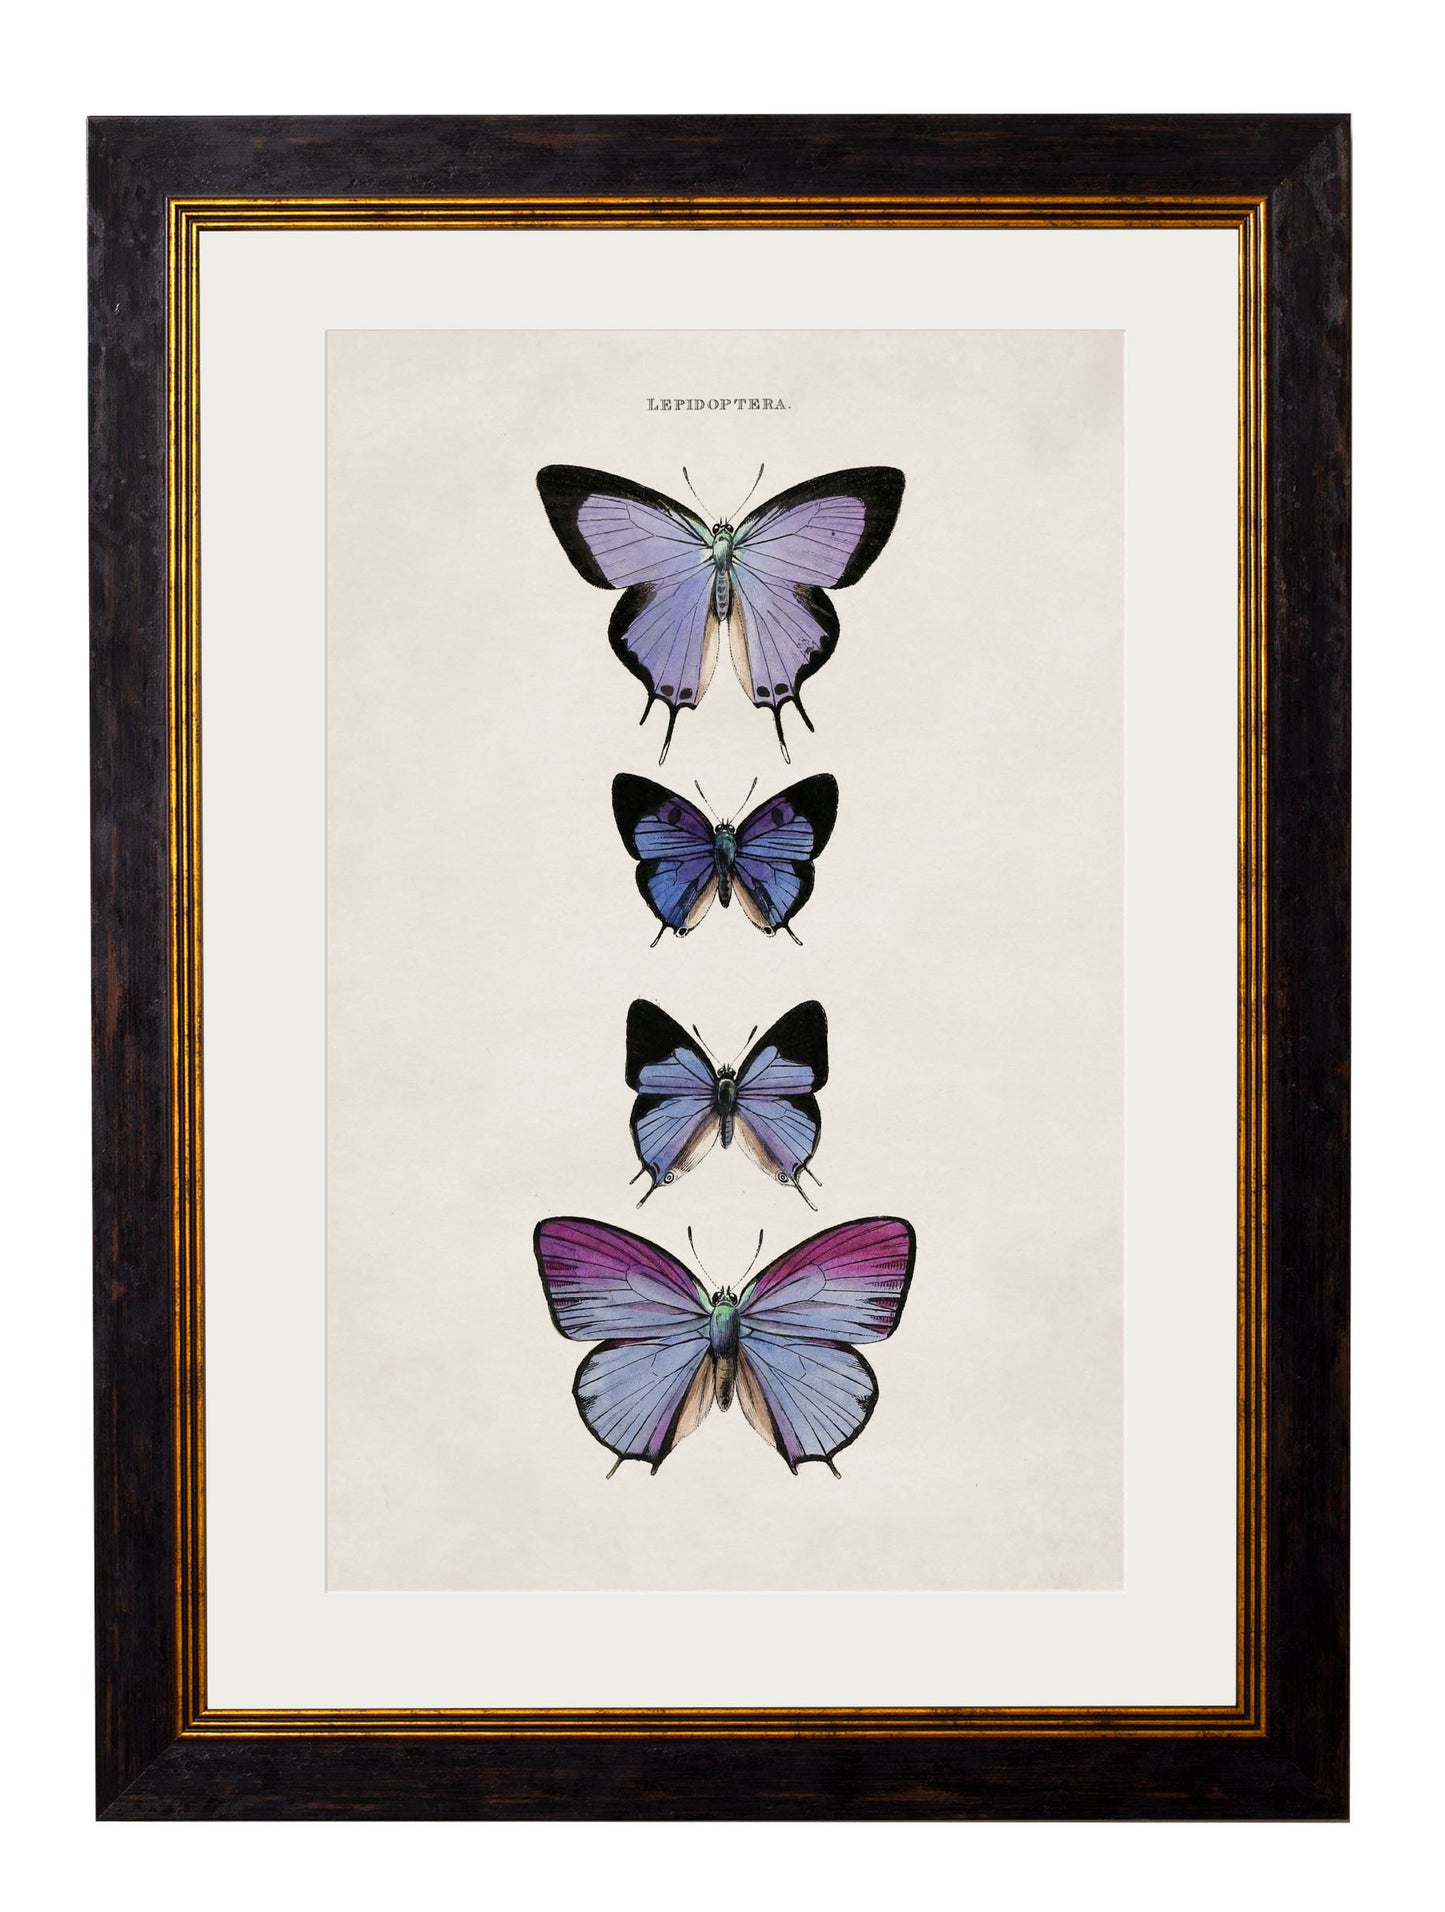 Framed Butterfly Prints